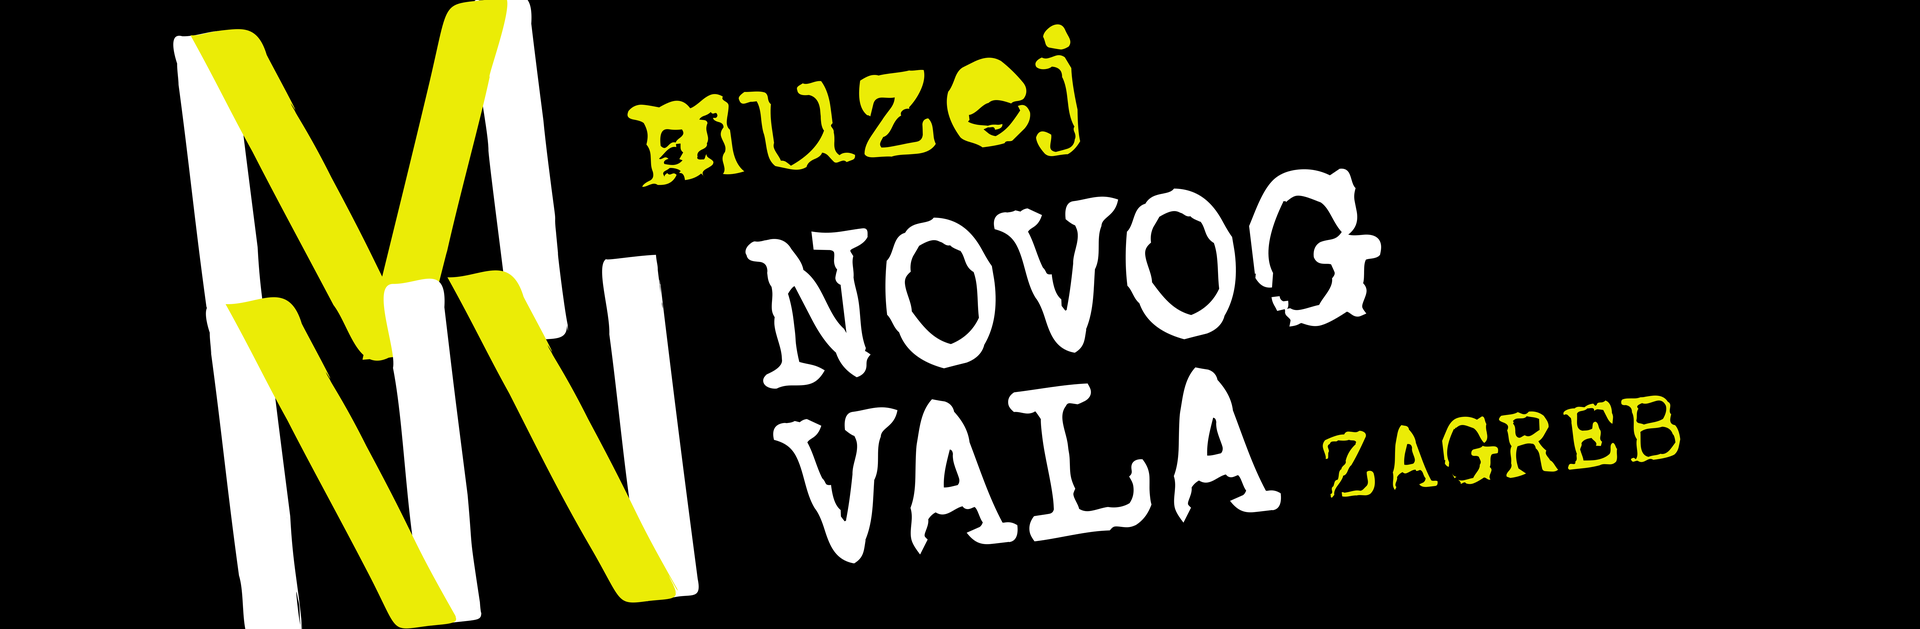 Osvoji ulaznice za Muzej novog vala u Zagrebu